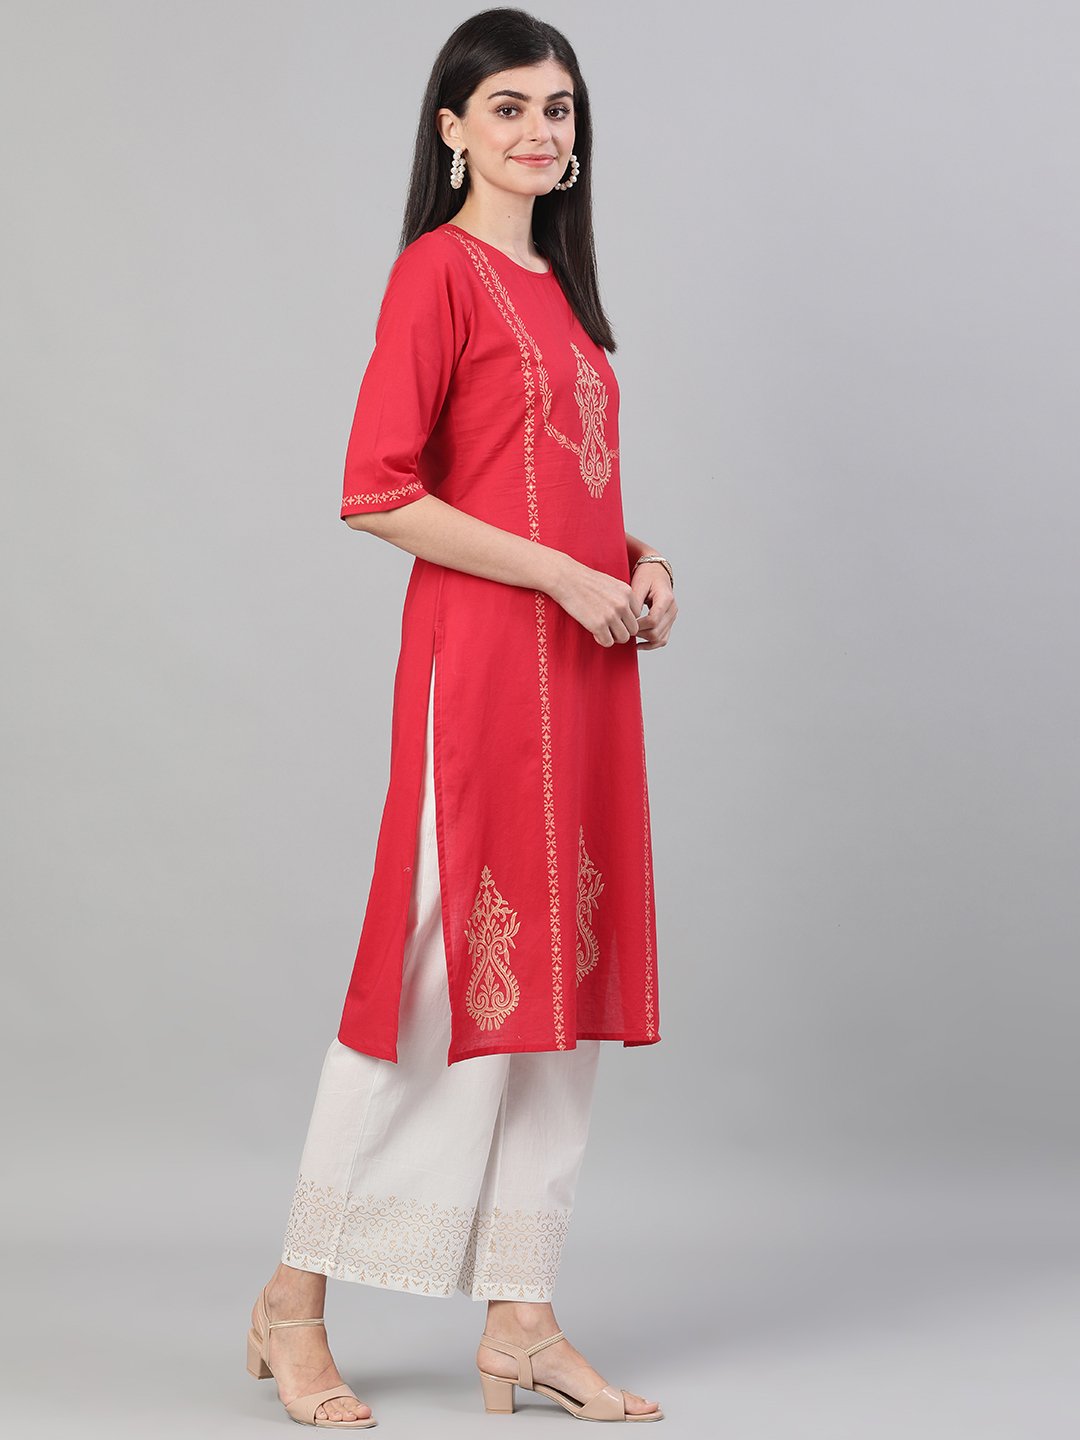 Buy Off White and Red Printed Designer Palazzo Salwar Kameez Online -